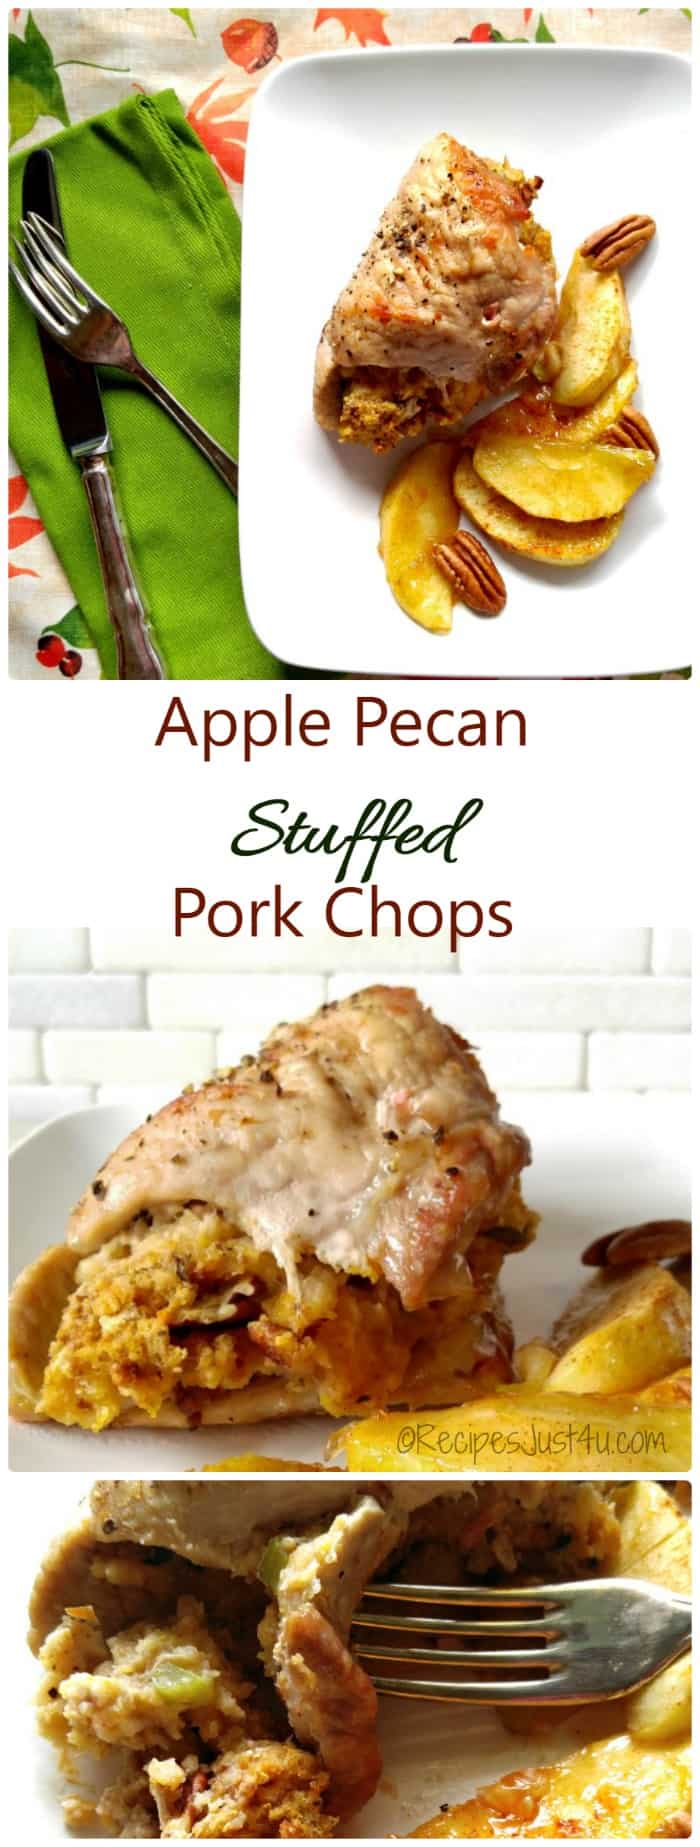 Apple pecan stuffed porkchops